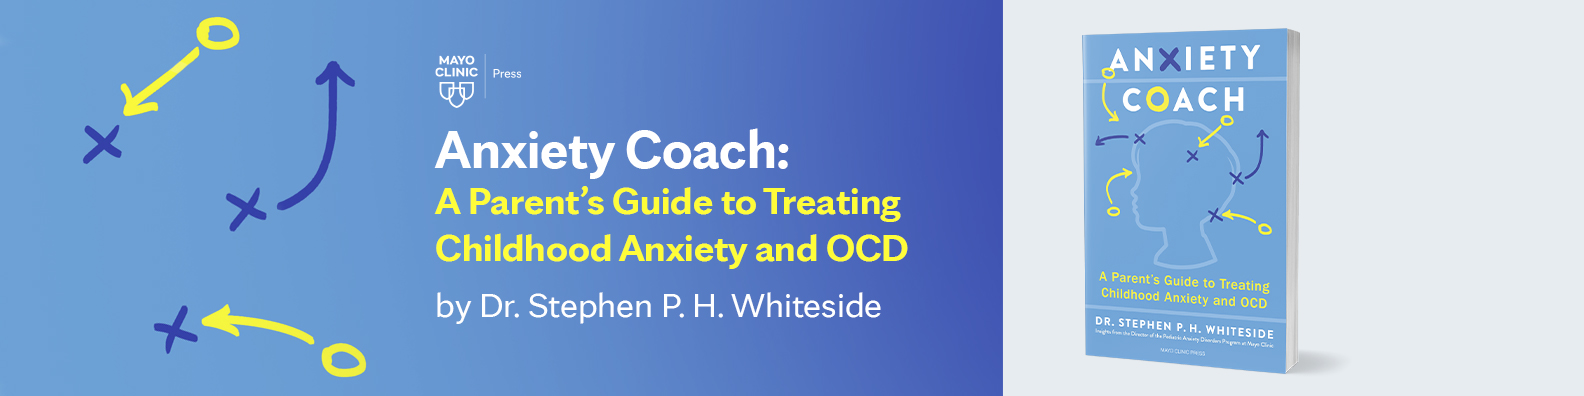 Anxiety-Coach_Linkedin-header